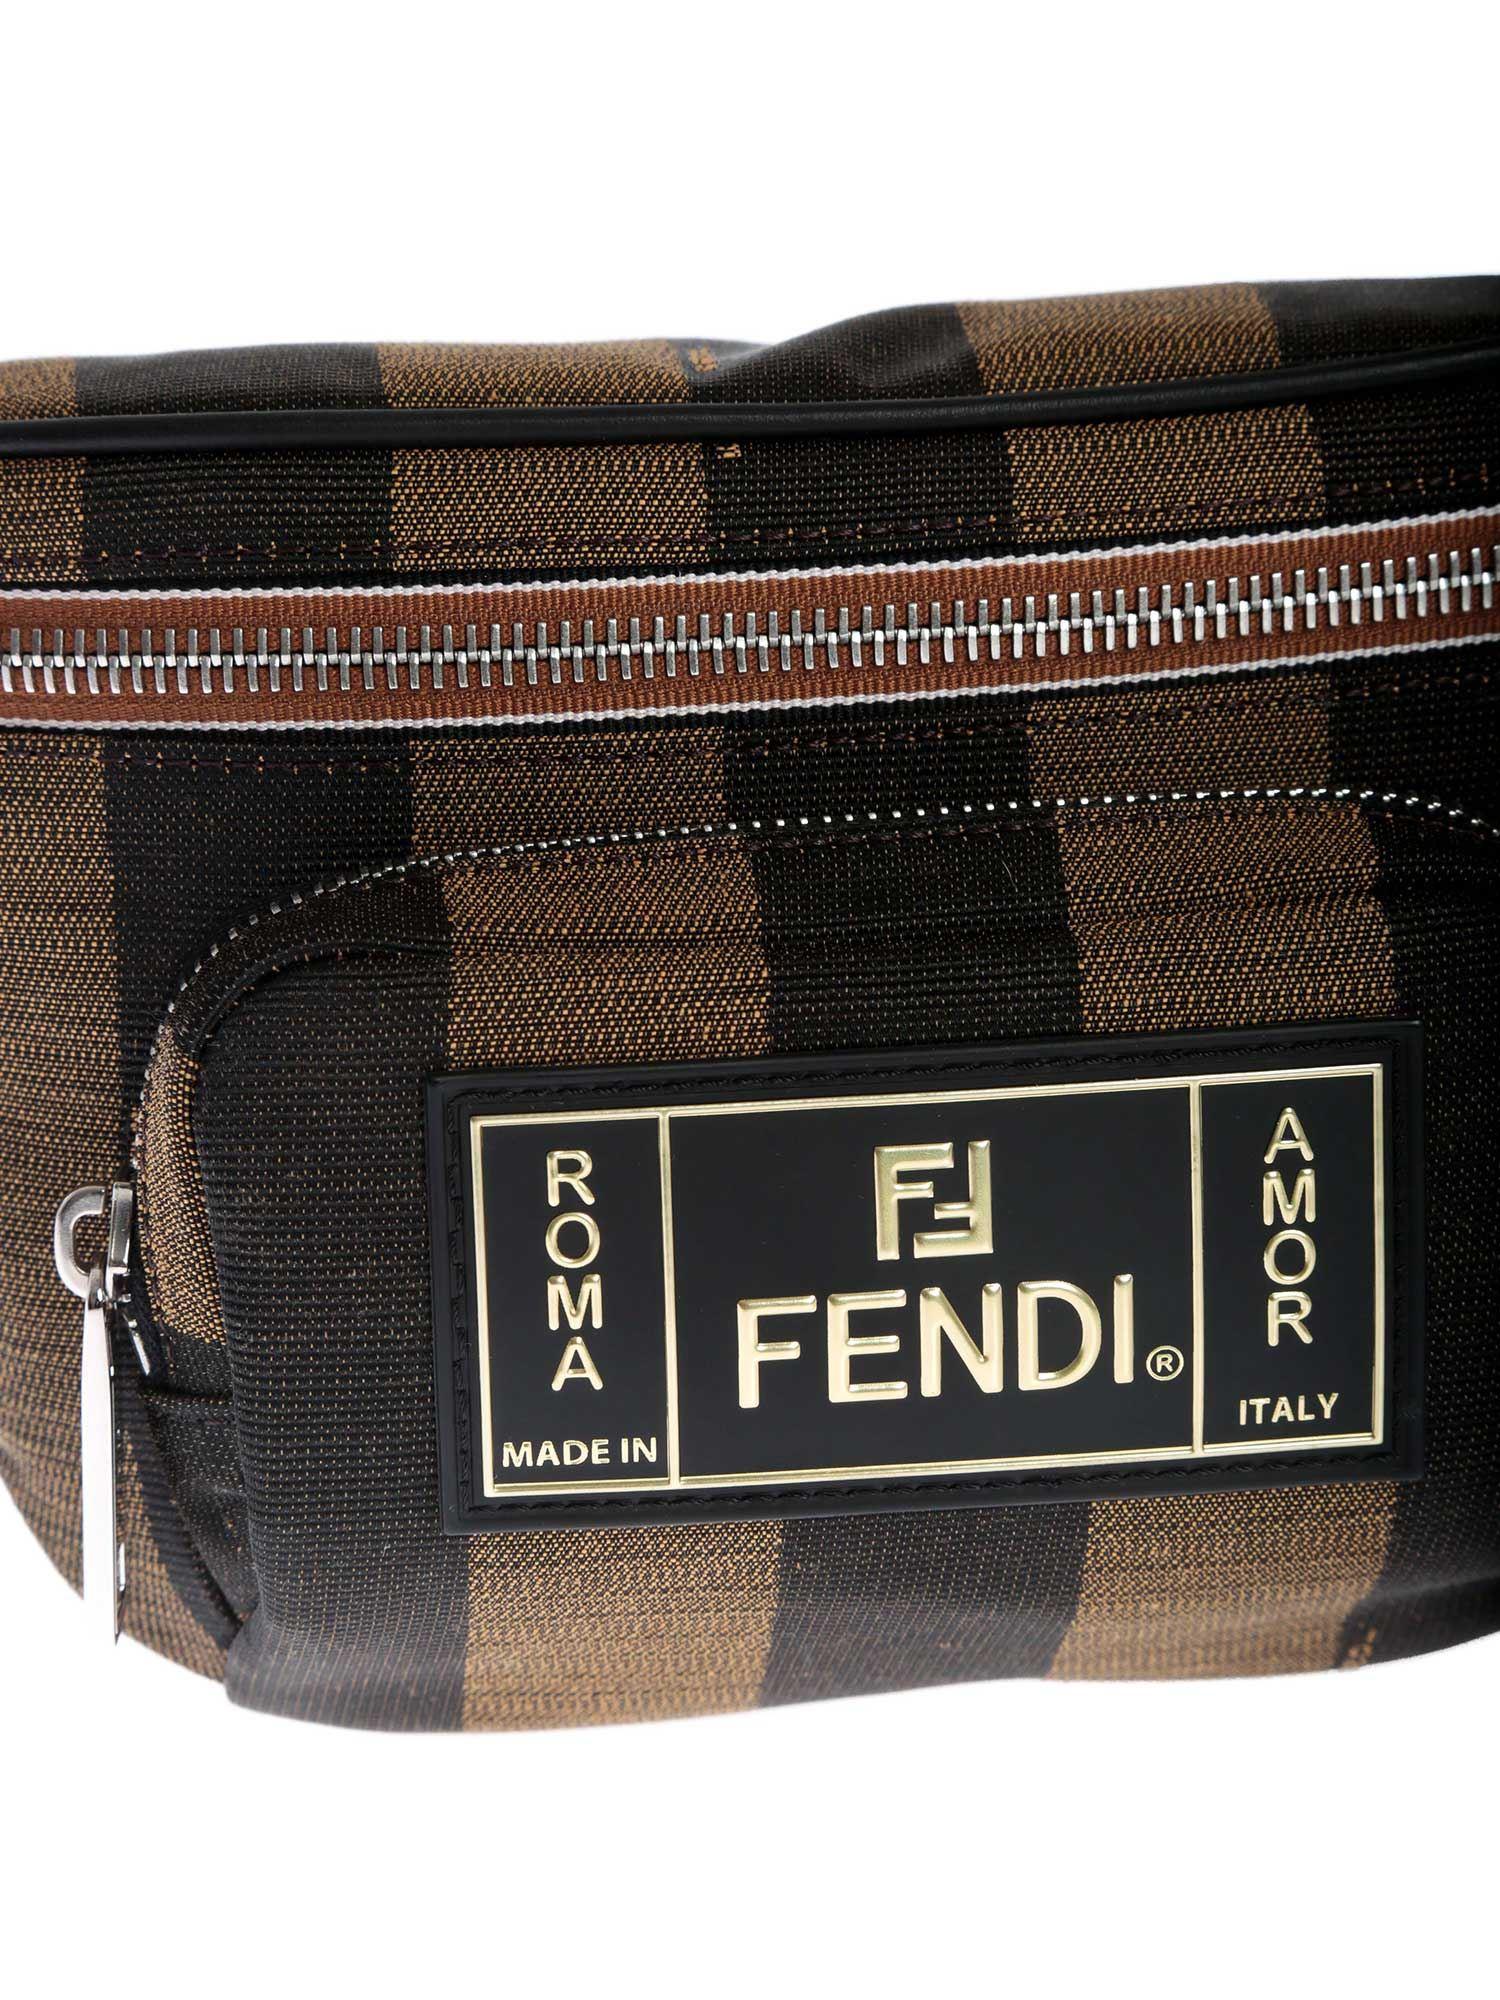 Fendi Jaquard Fabric Waist Bag In Brown in Brown for Men - Lyst